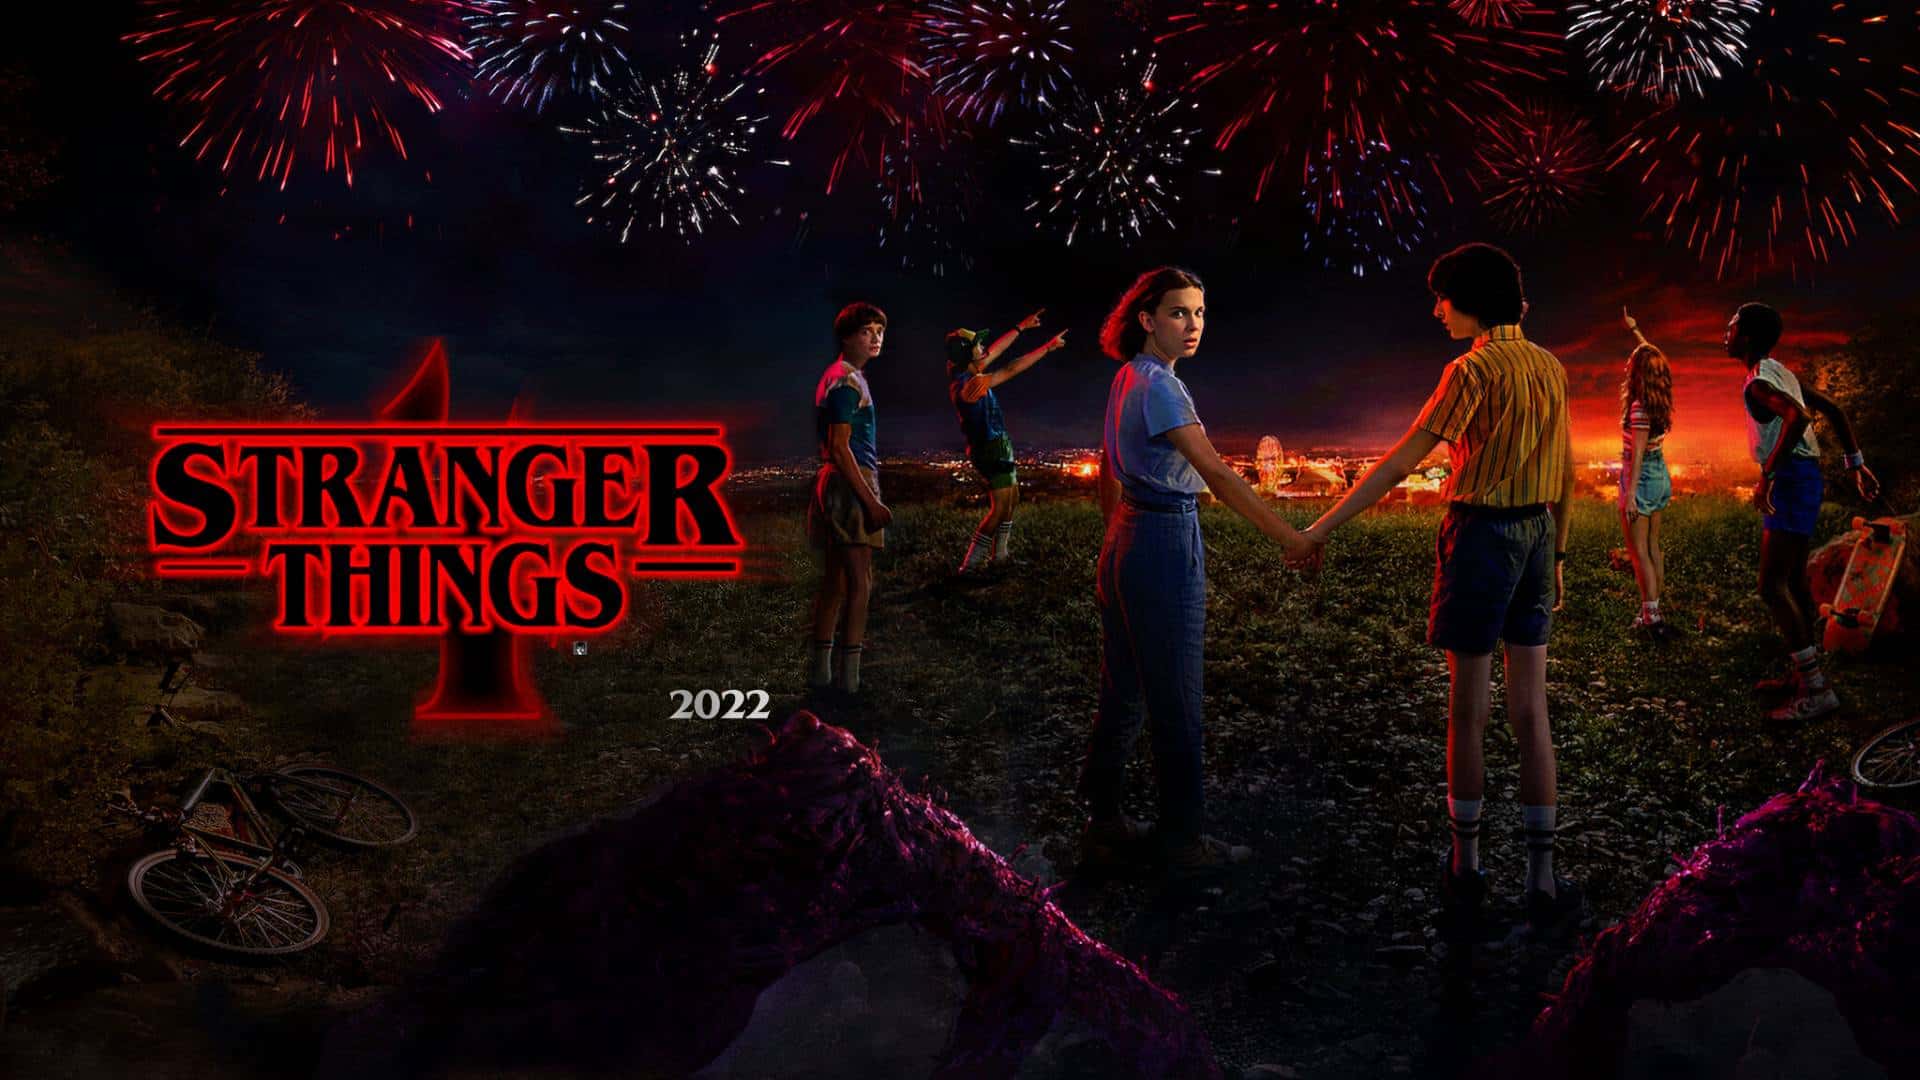 Stranger Things 4' Has Big Blockbuster Energy